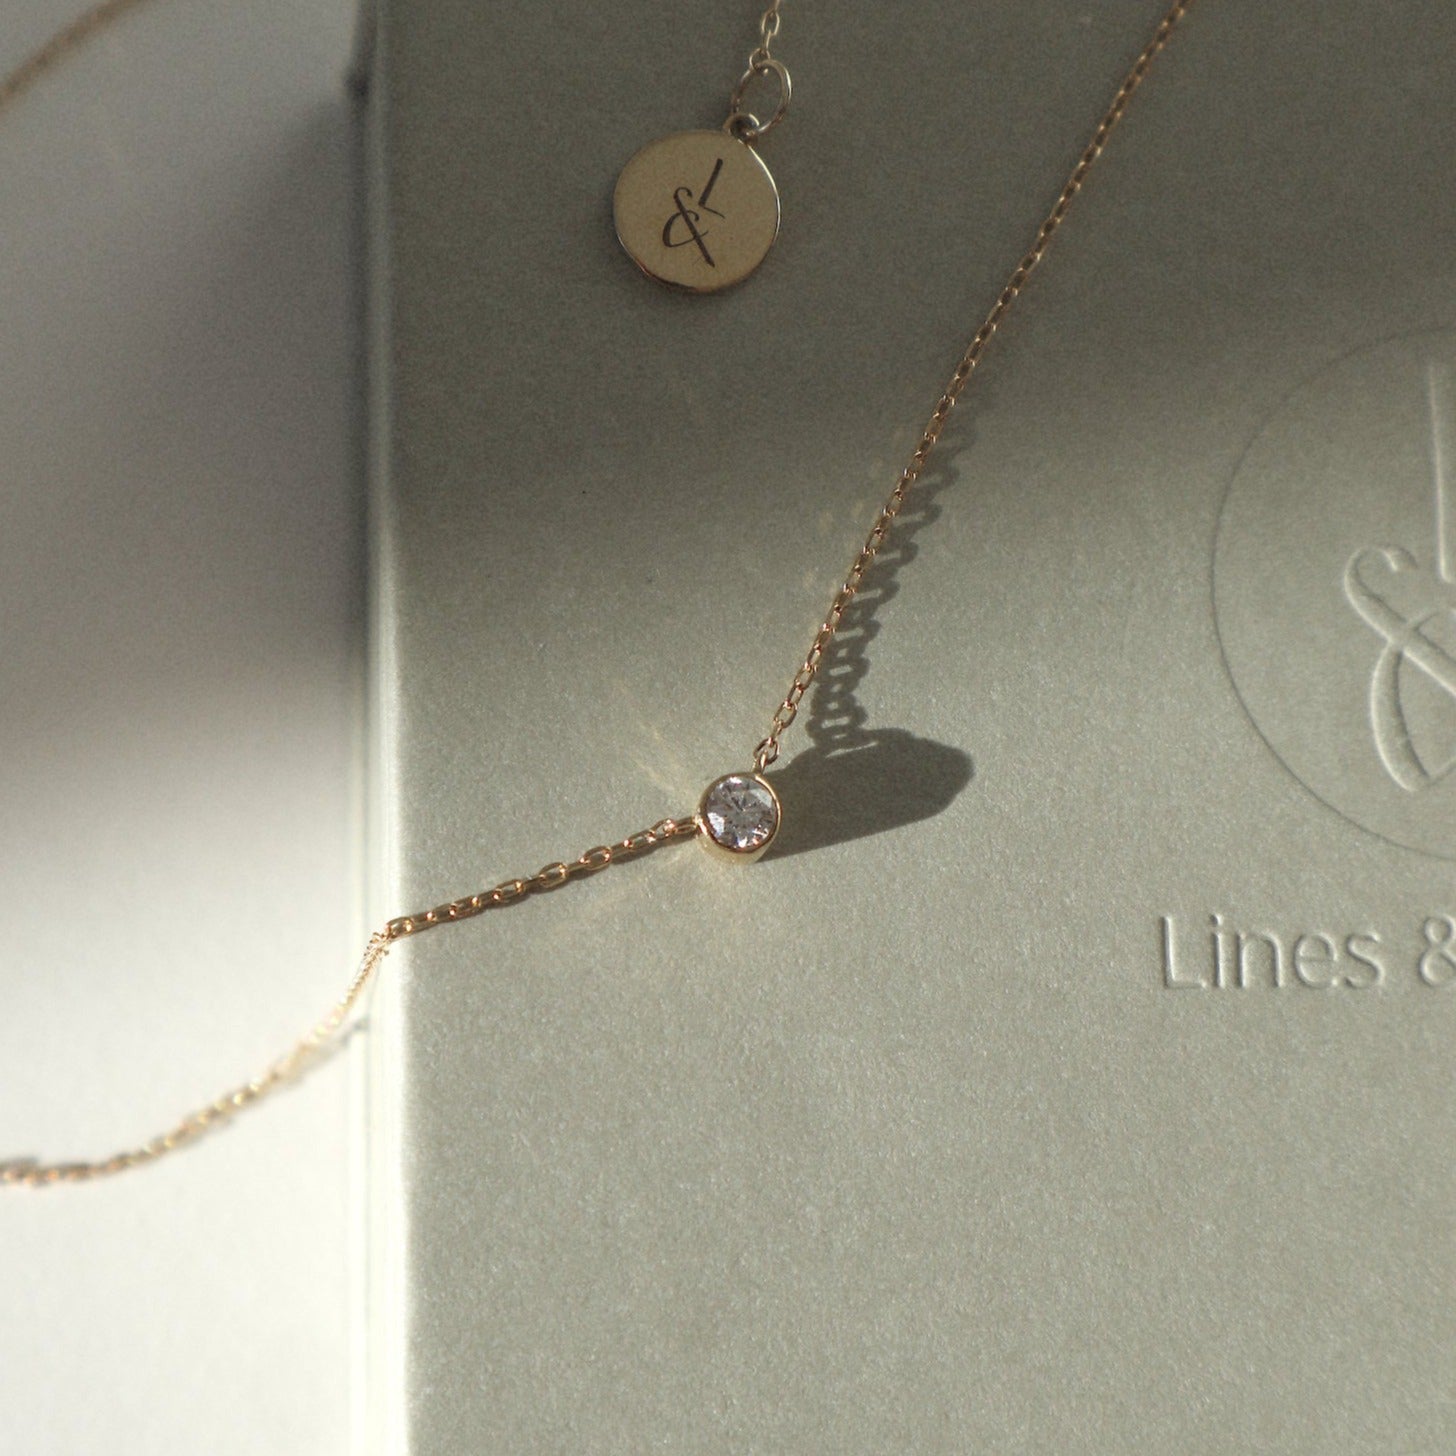 Lana Jewelry: Shop Online - Free Shipping